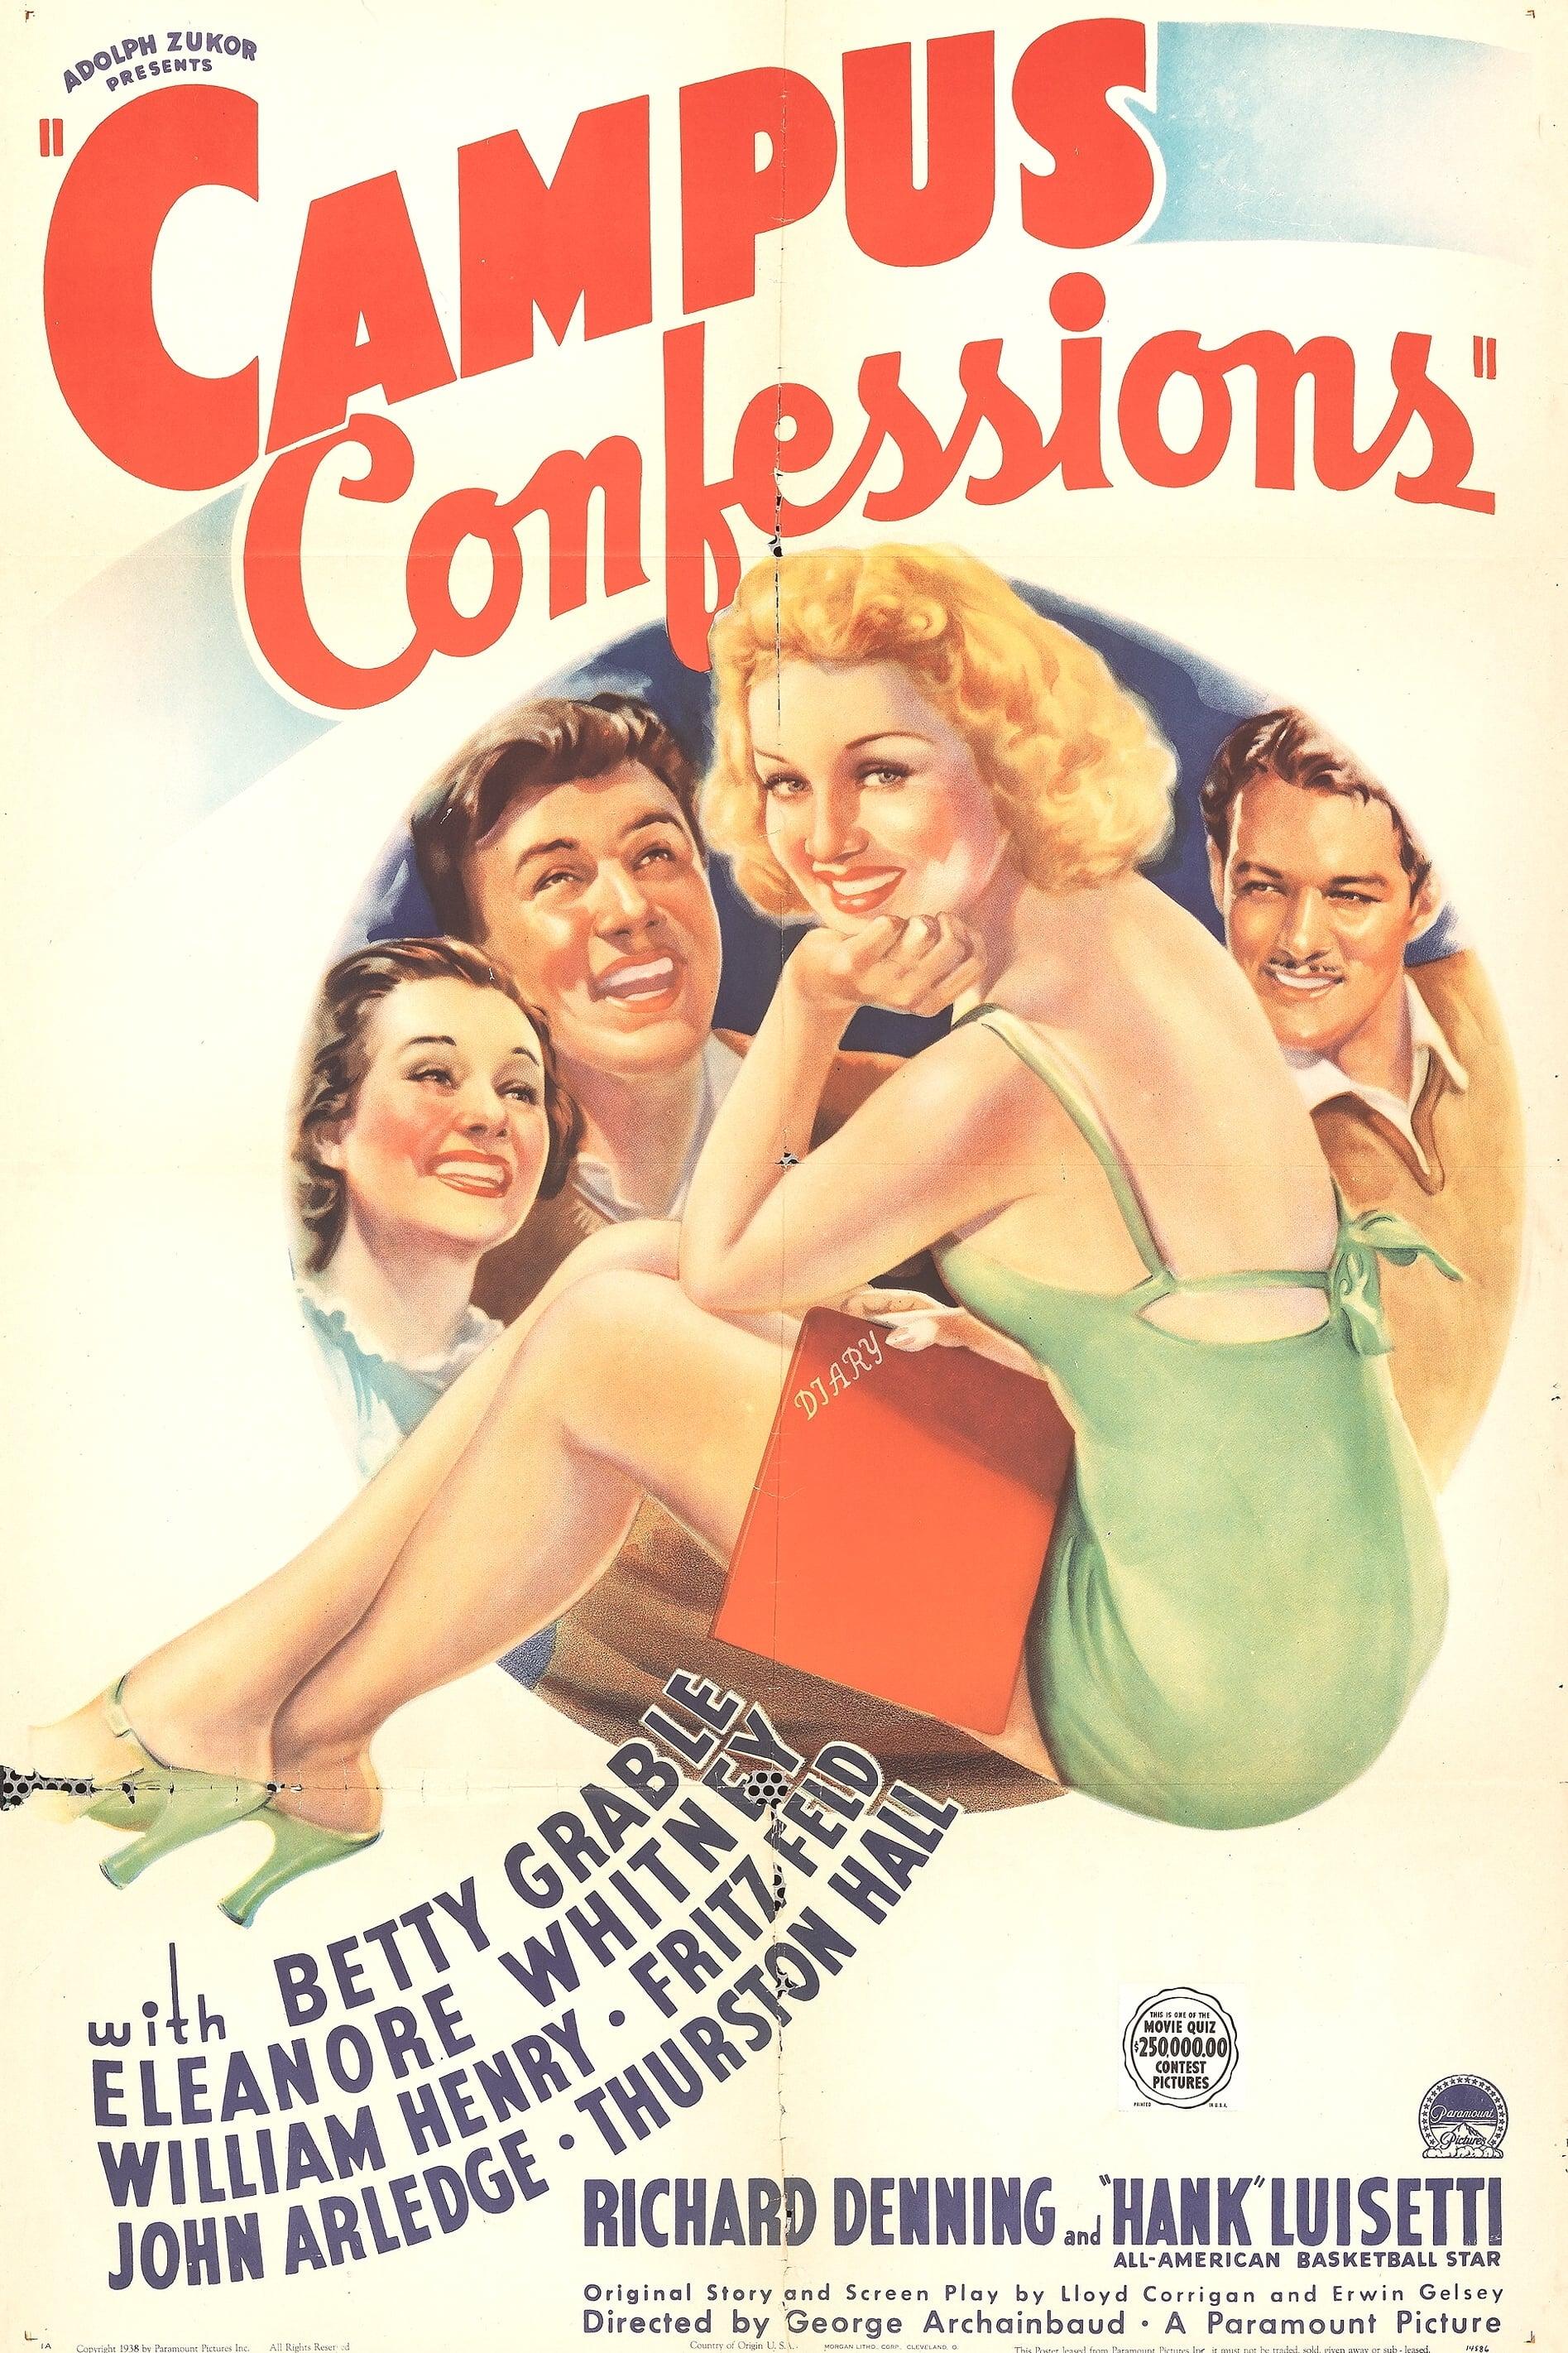 Campus Confessions poster